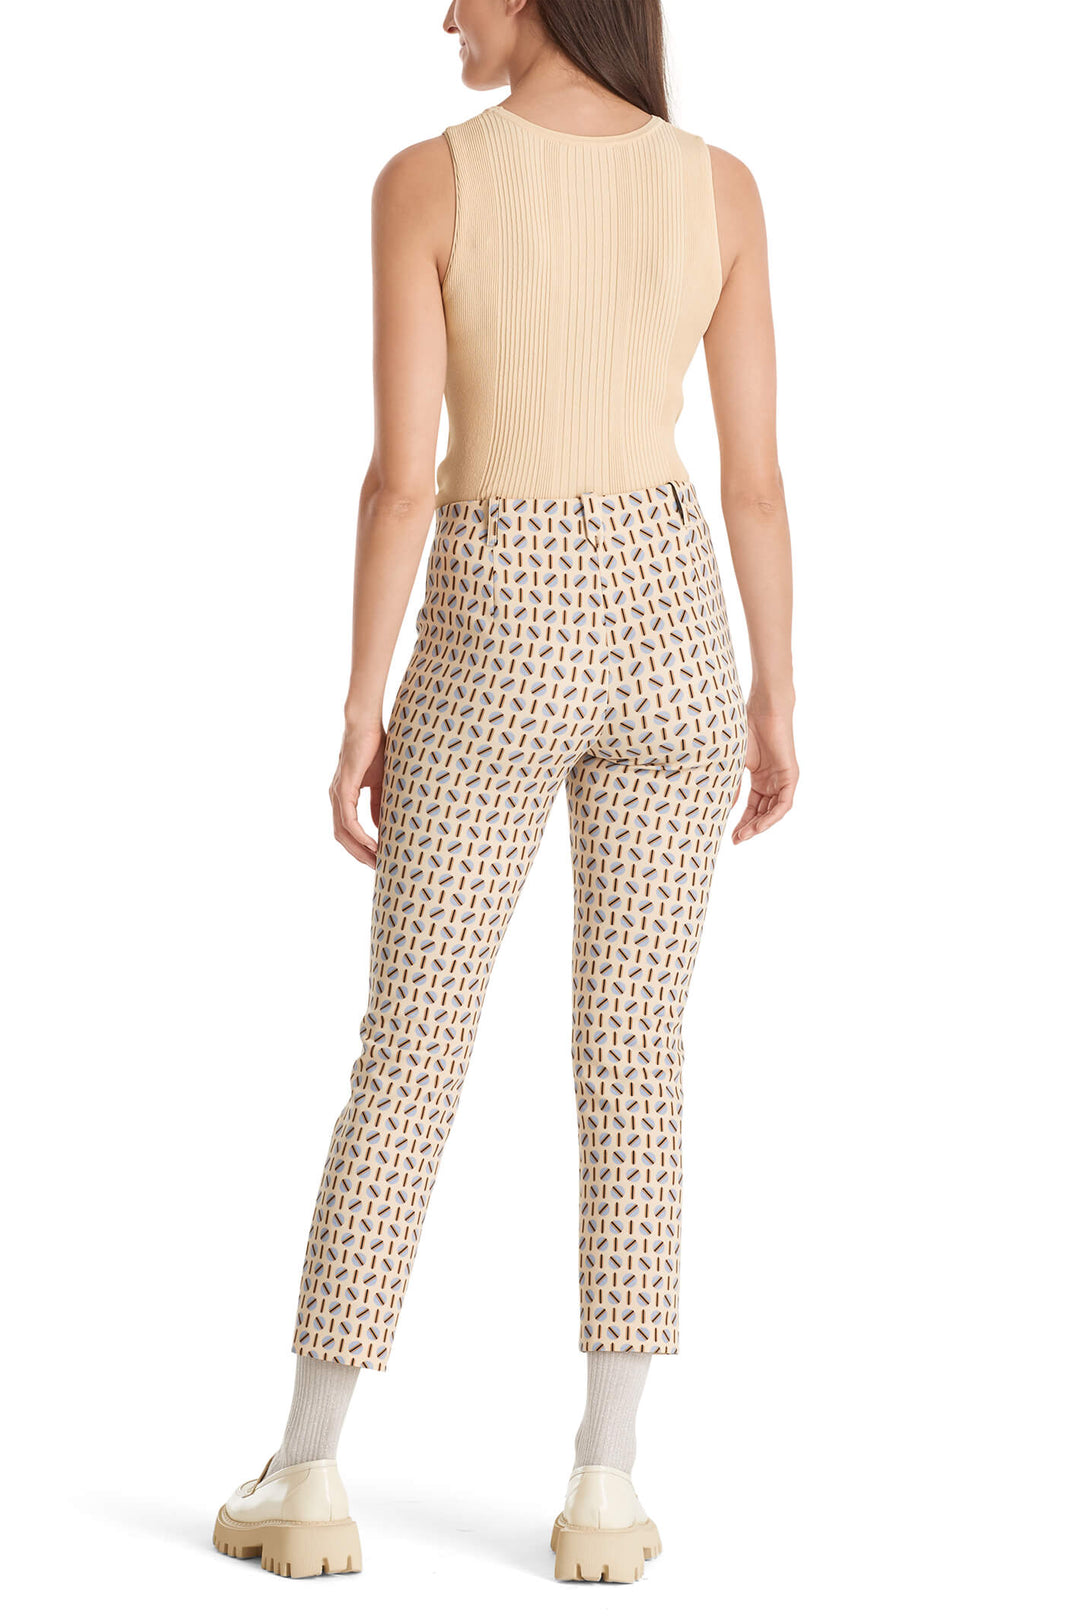 Marc Cain VC 81.11 J04 Cream Circle Print Cropped Stretch Trousers - Olivia Grace Fashion